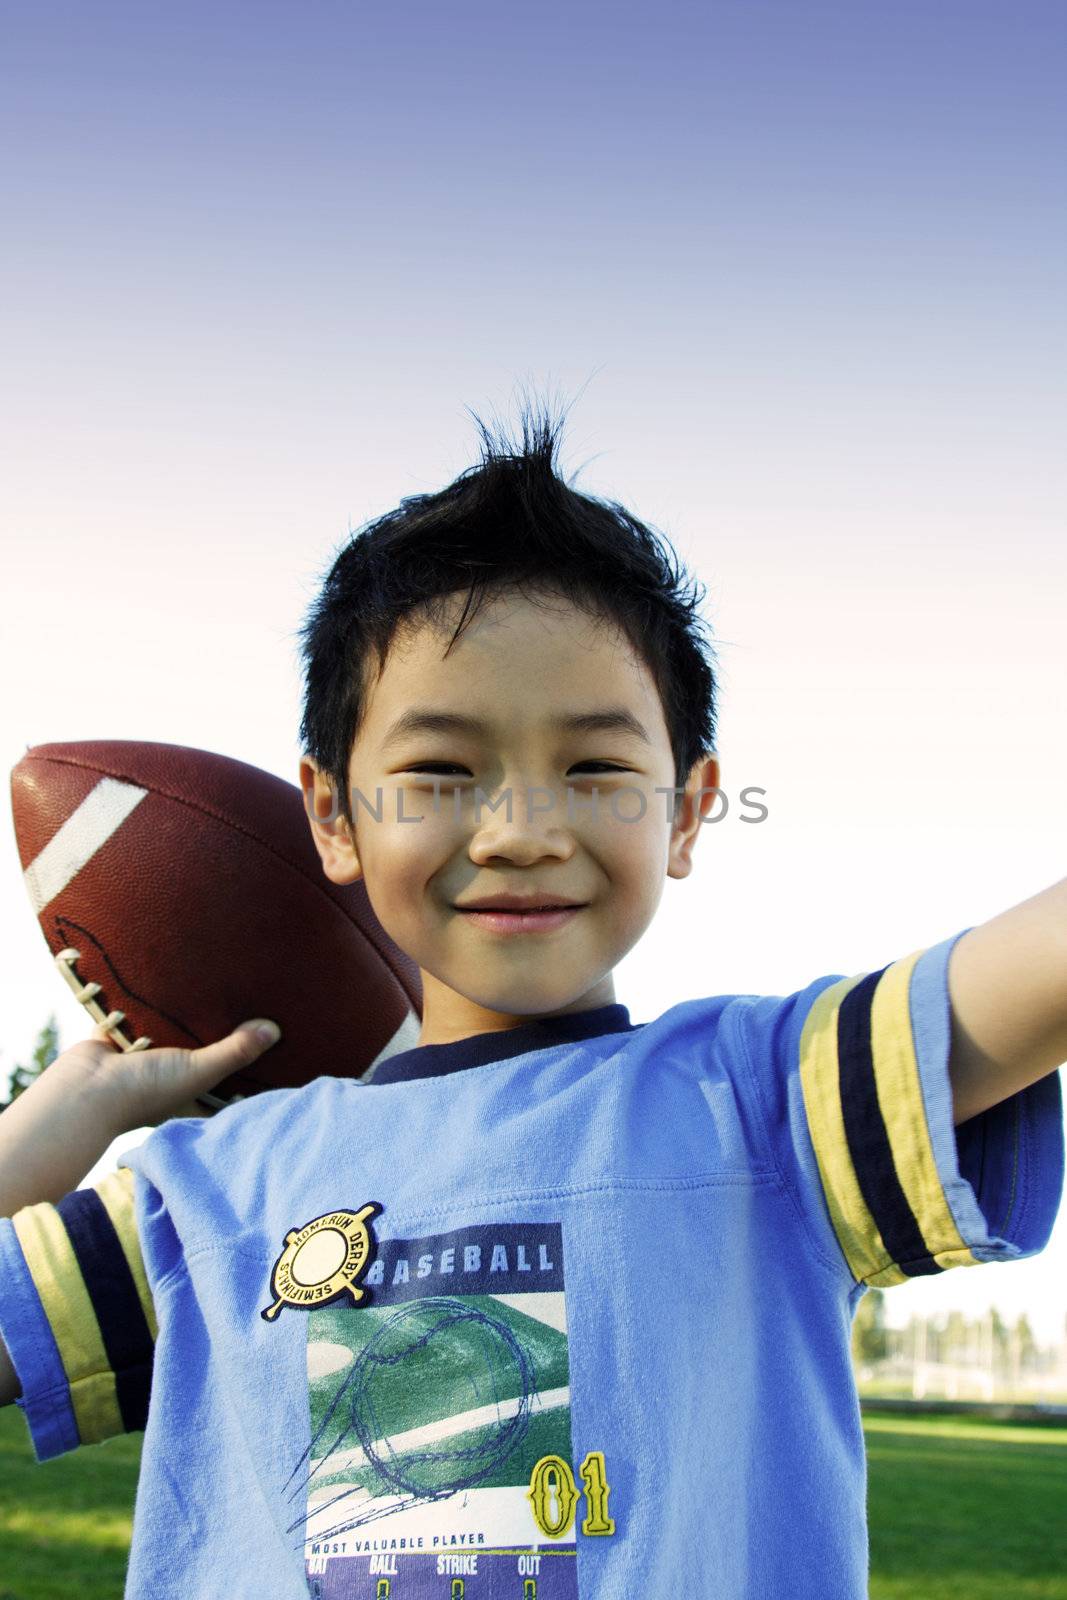 A boy throwing a football